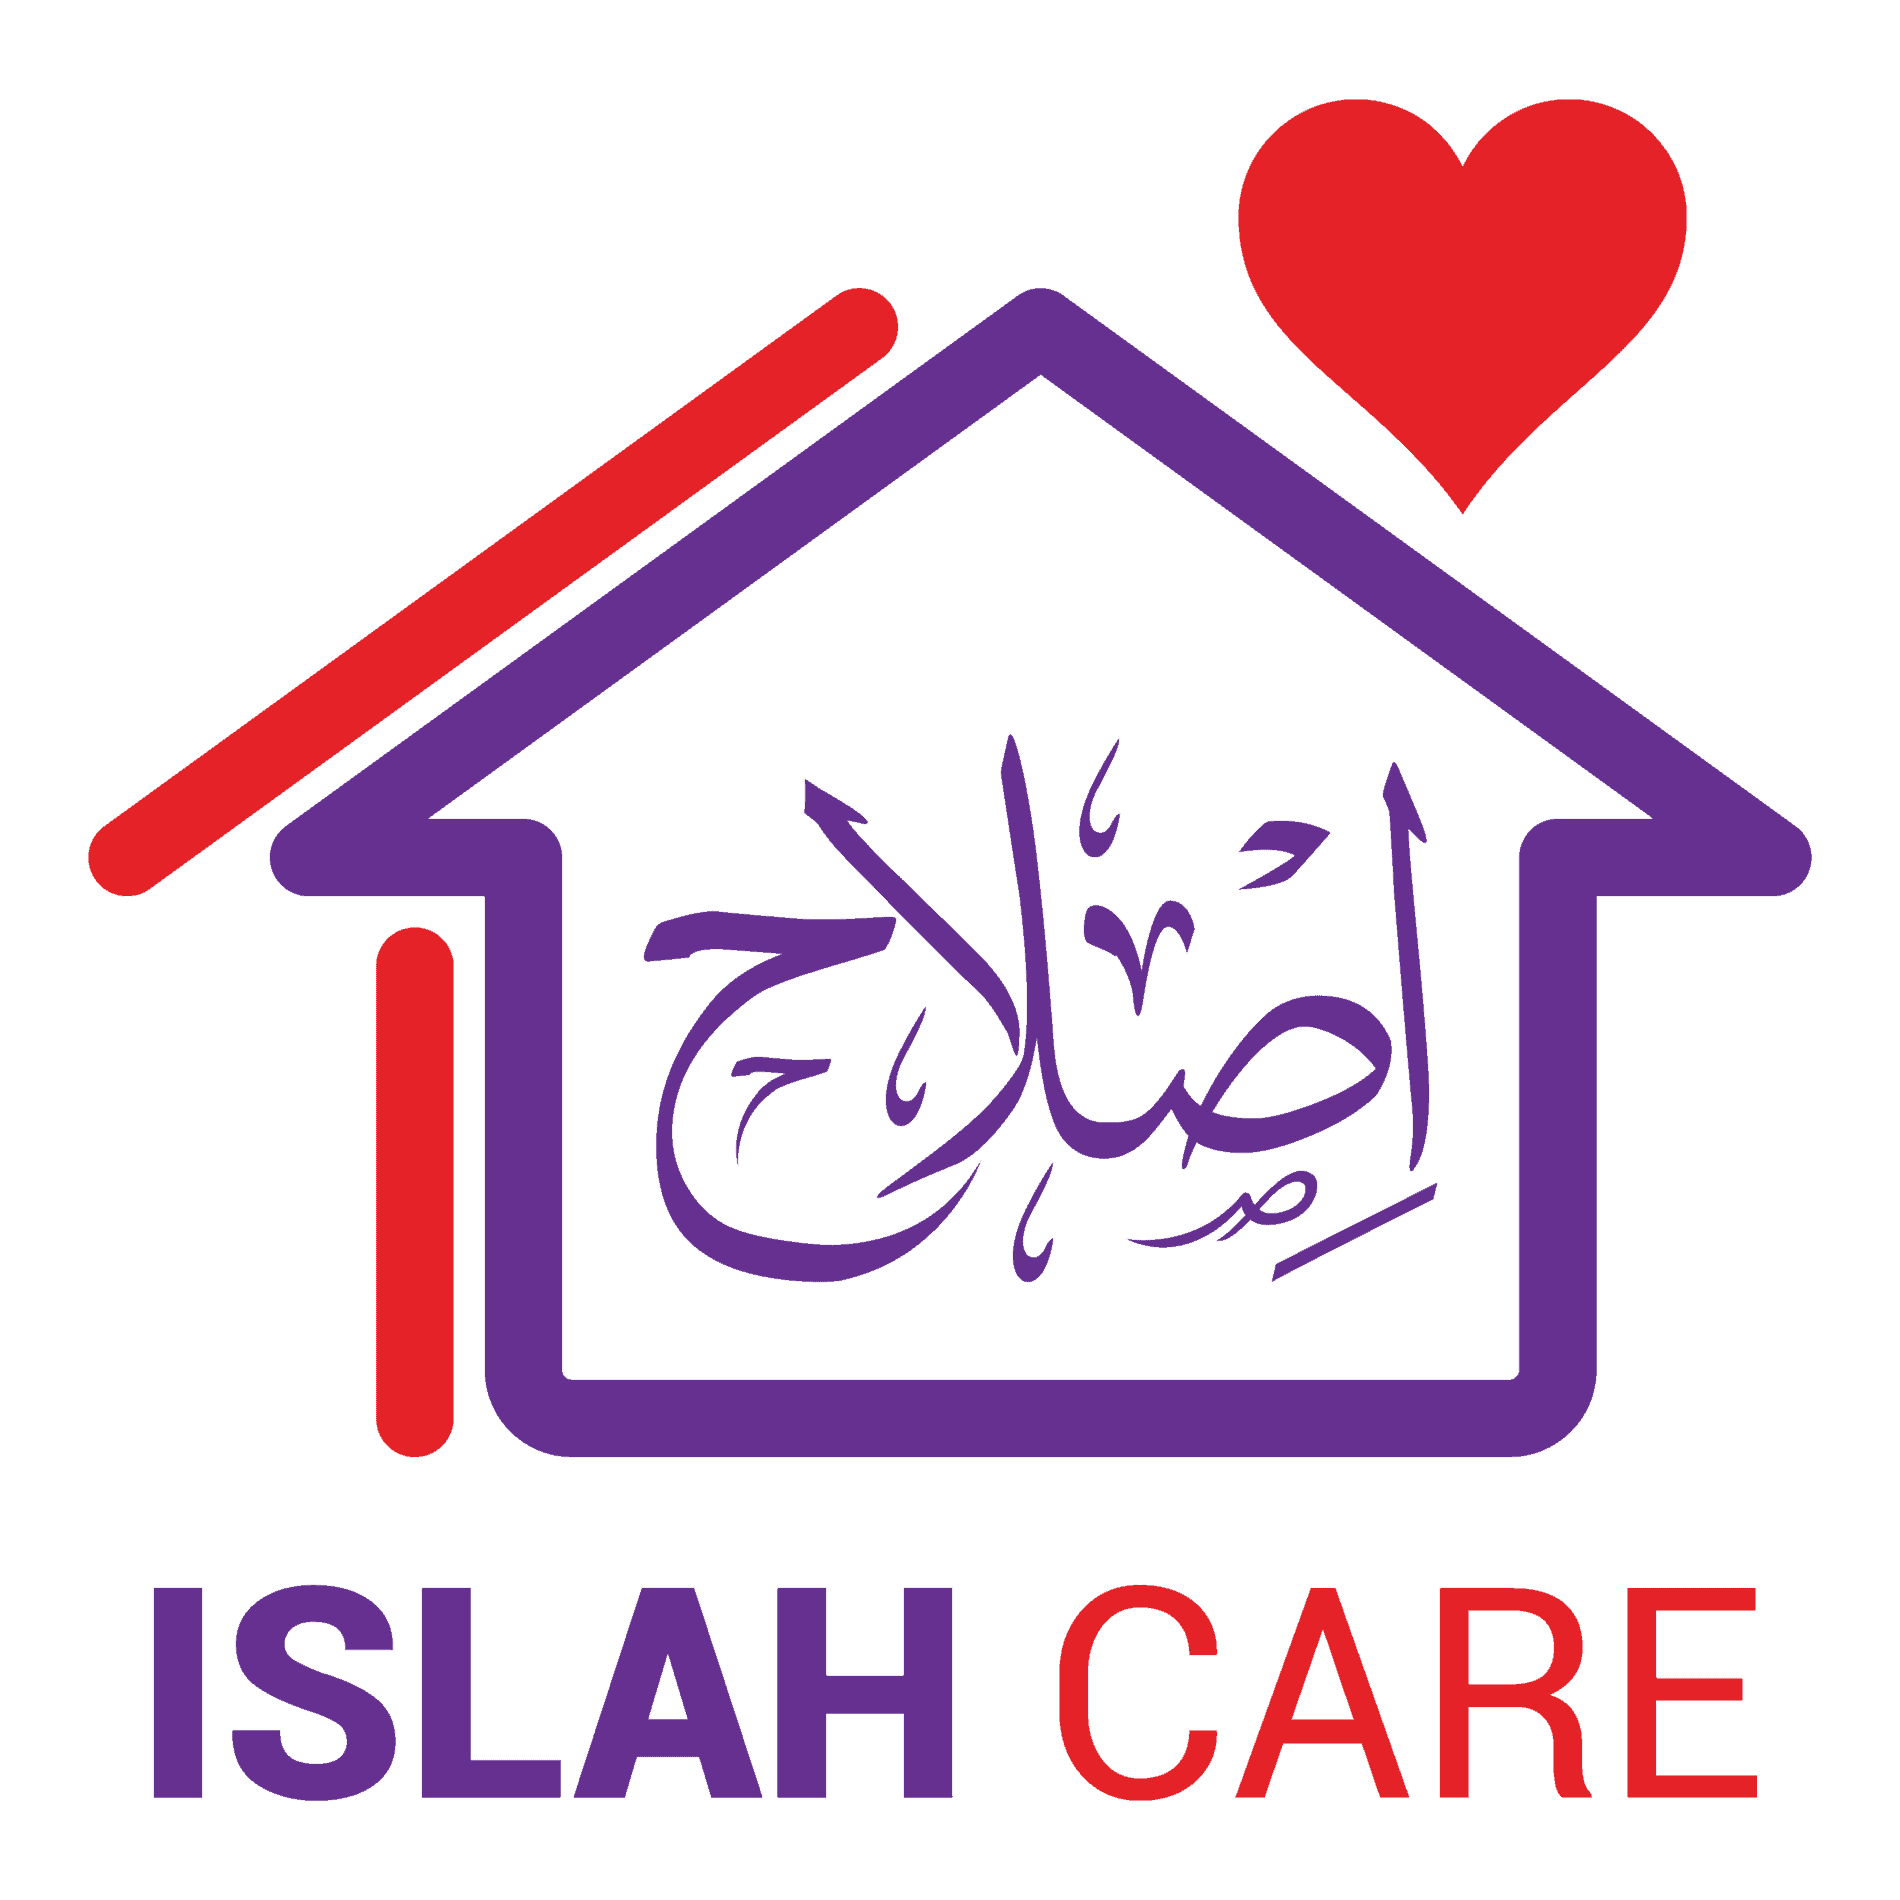 LOGO - ISLAH CARE-01